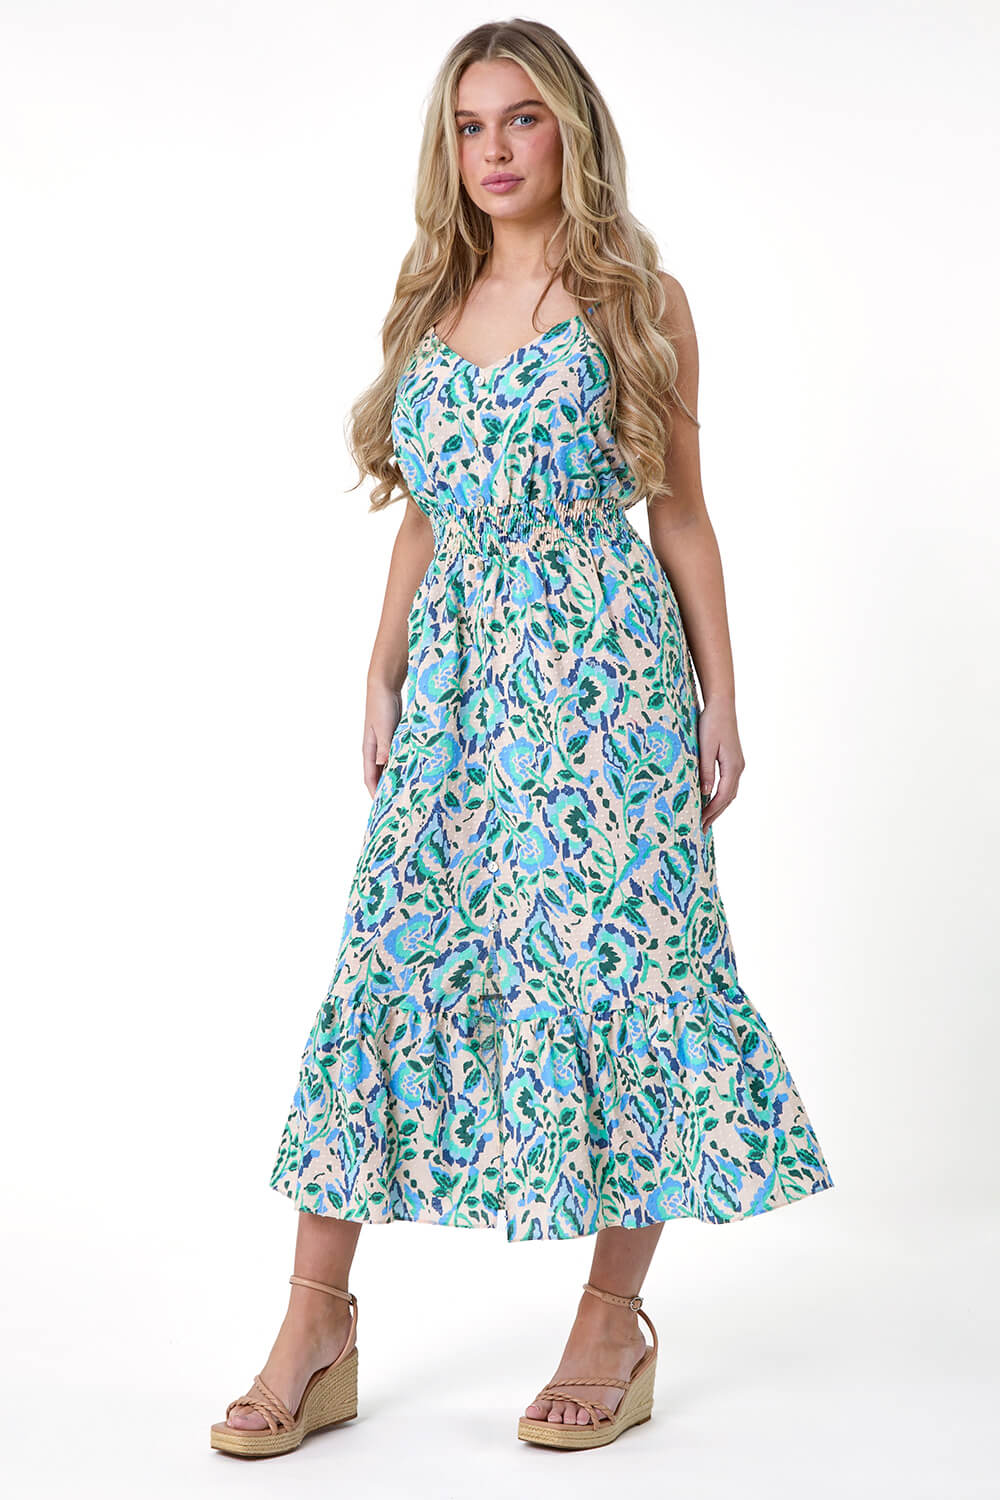 Turquoise Petite Floral Textured Spot Cotton Midi Dress, Image 2 of 5